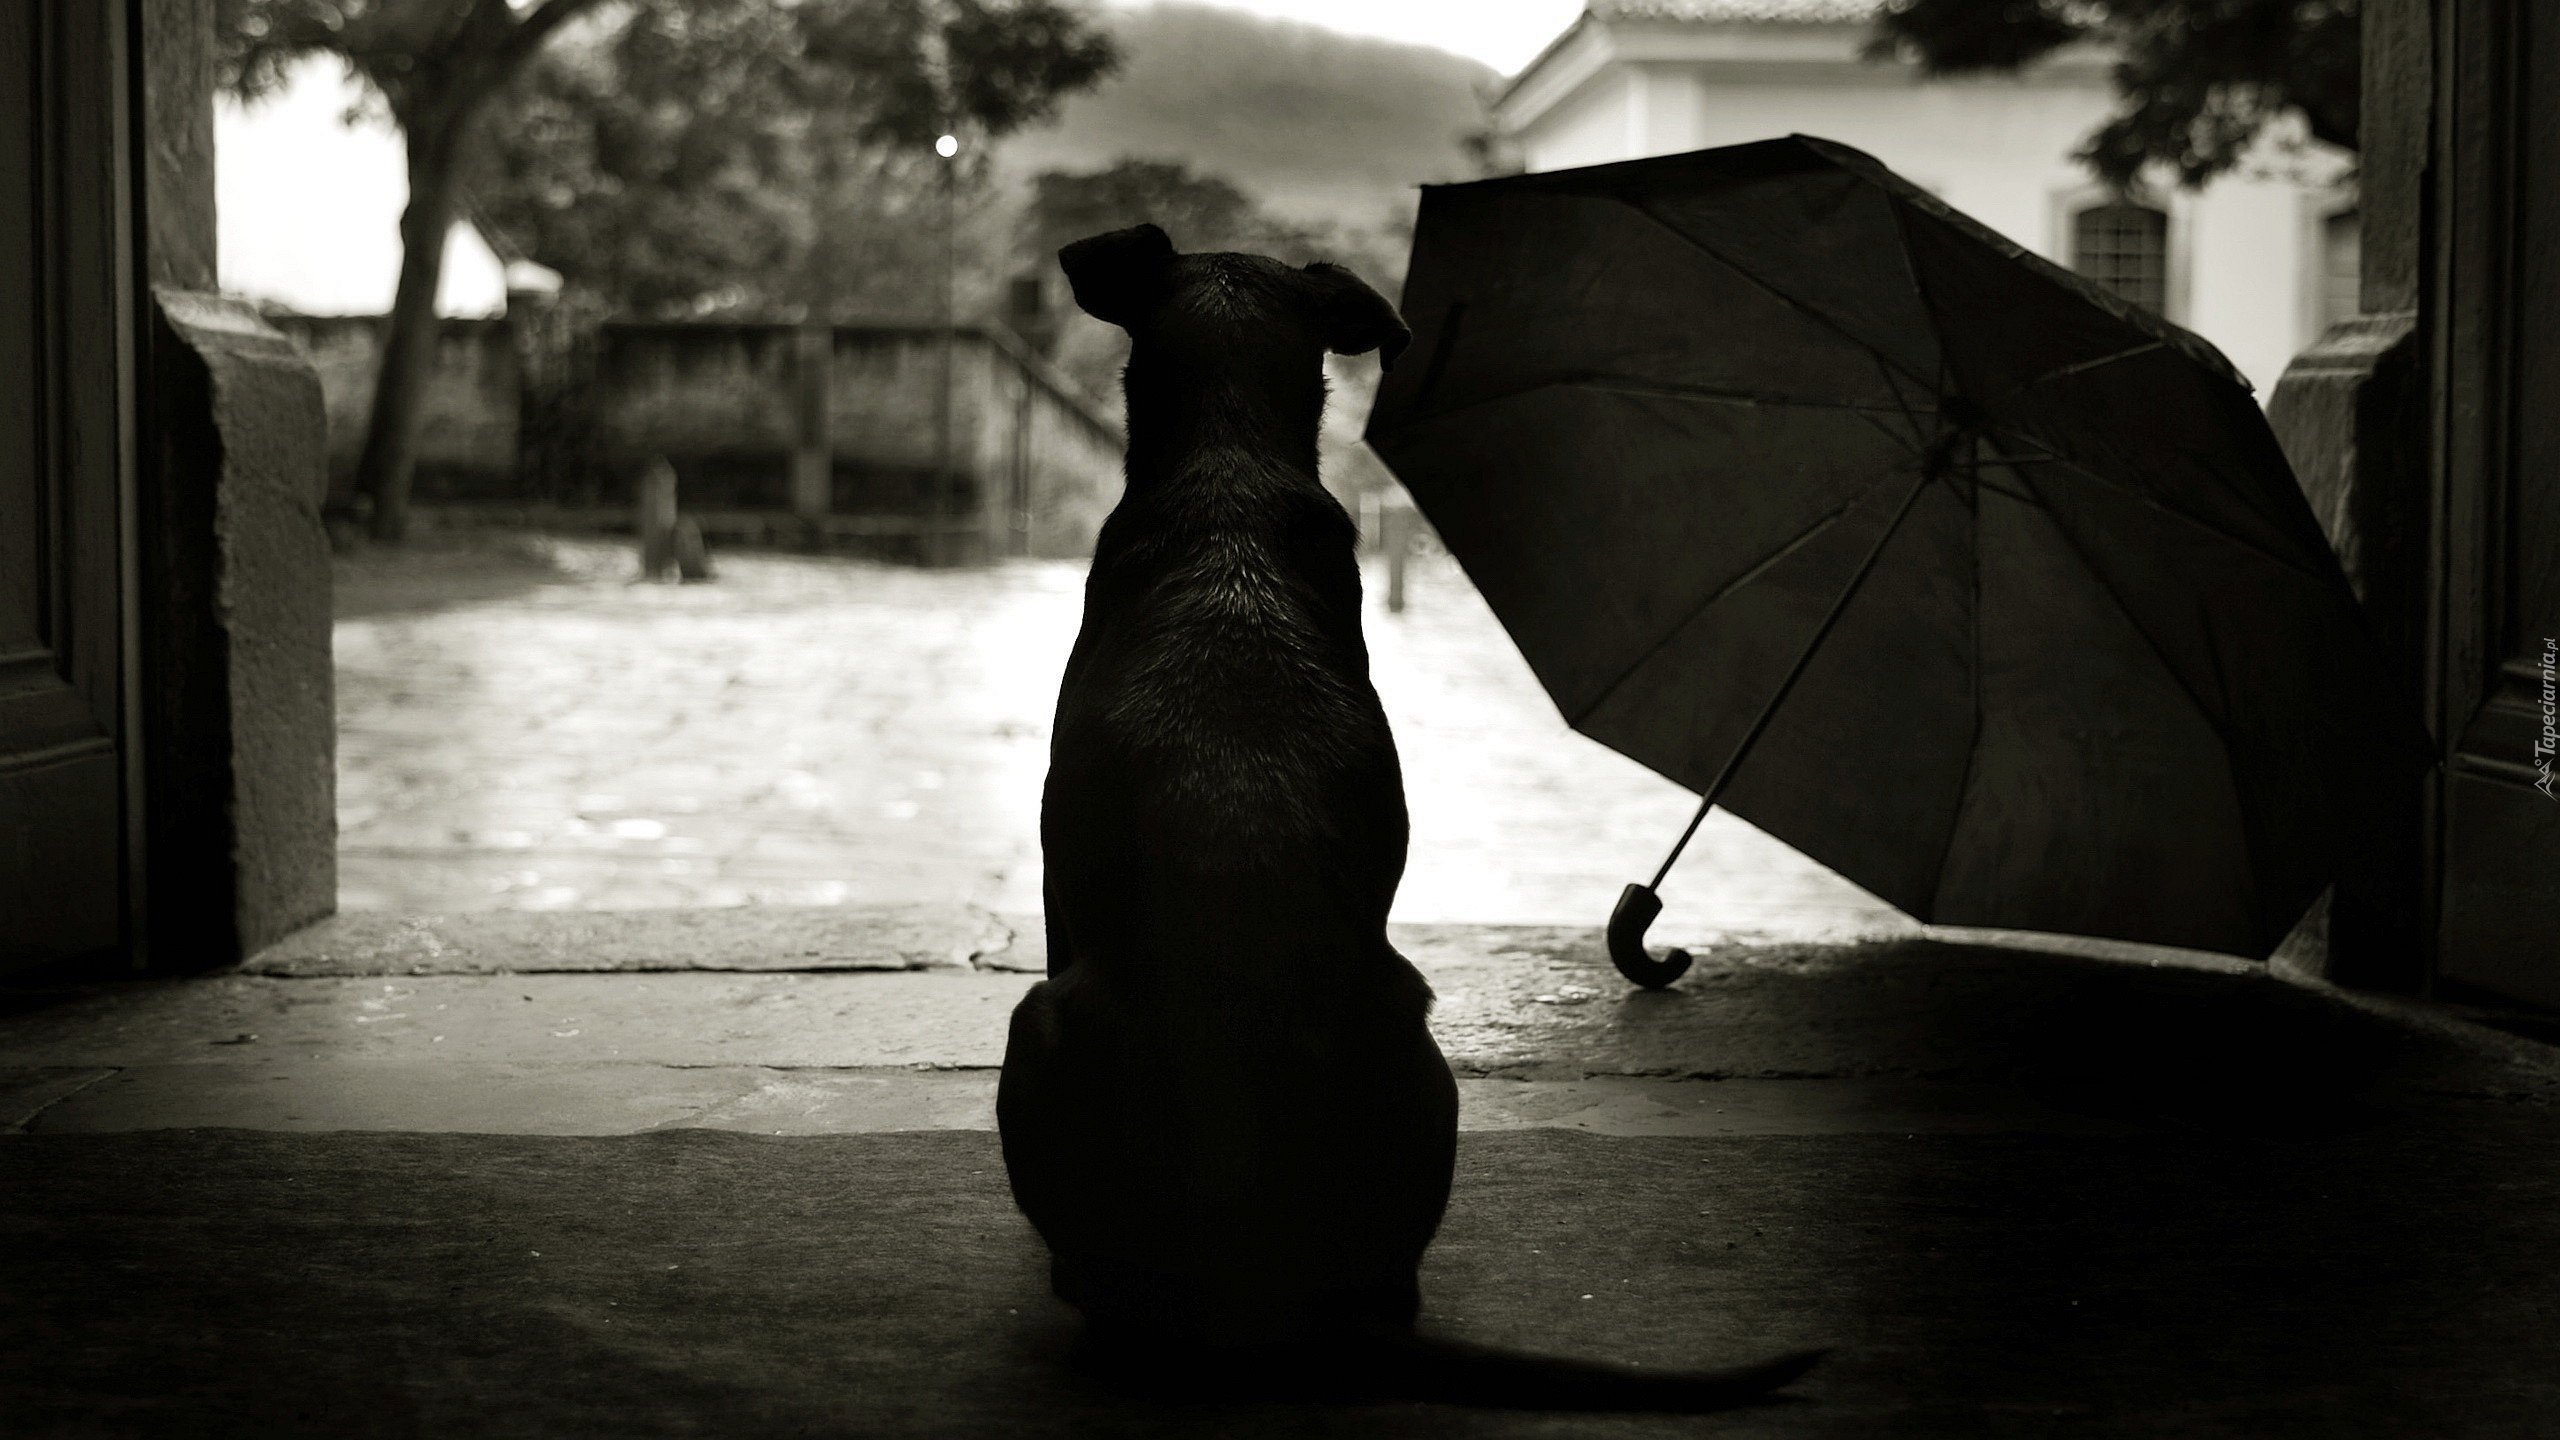 Pies, Parasol